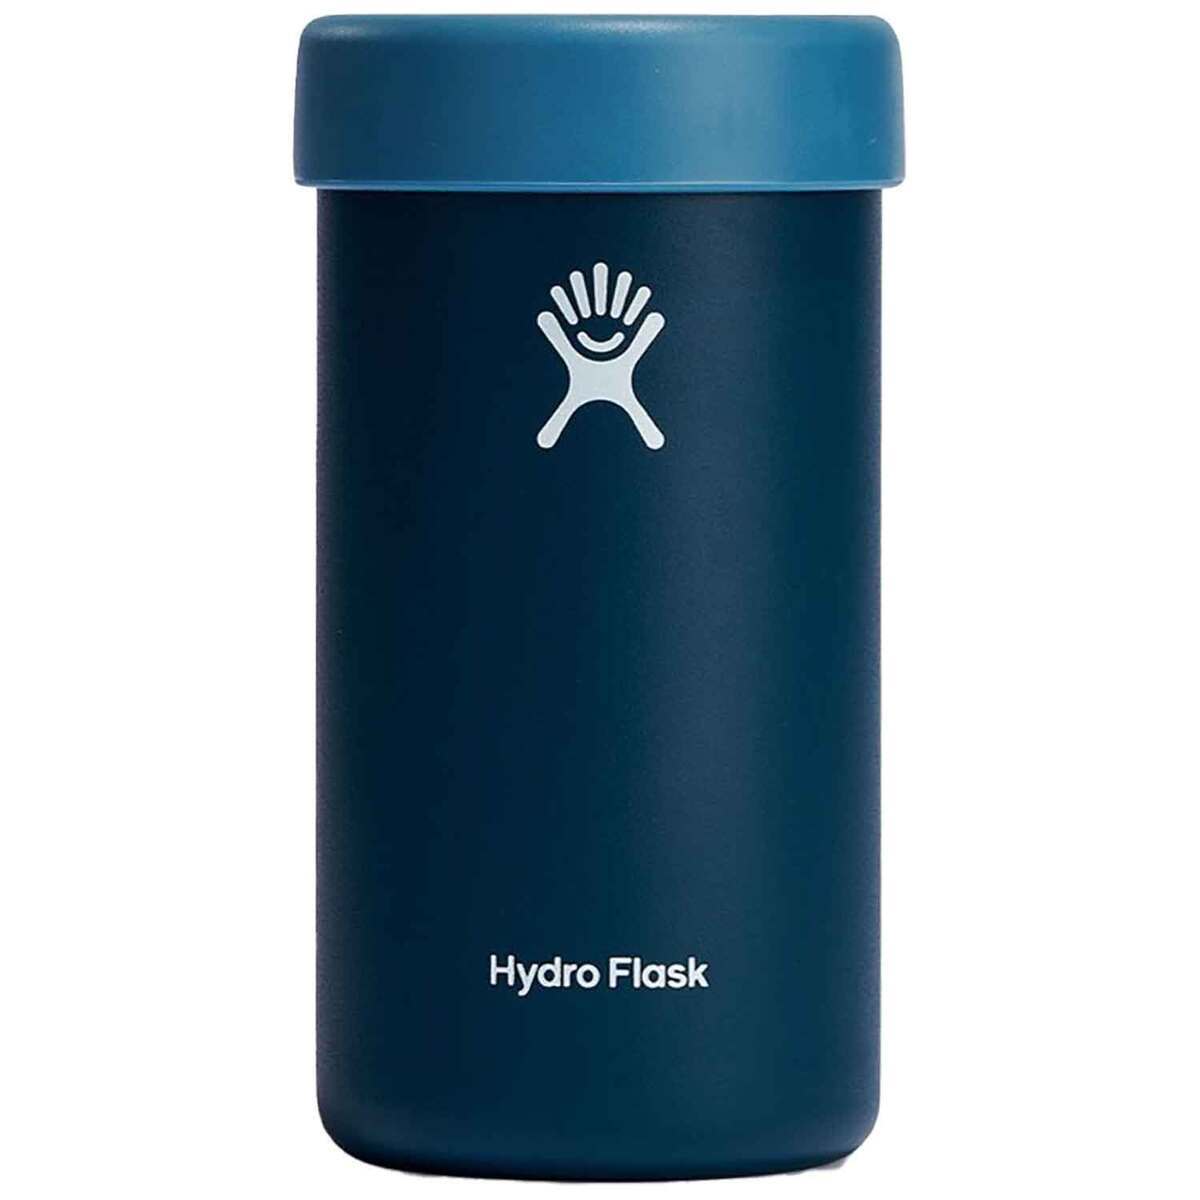 https://www.sportsmans.com/medias/hydro-flask-16oz-tallboy-cooler-can-insulator-indigo-1743884-1.jpg?context=bWFzdGVyfGltYWdlc3wzMzc5OHxpbWFnZS9qcGVnfGg0NS9oMjYvMTA3Mzc0OTQwMzI0MTQvMTc0Mzg4NC0xX2Jhc2UtY29udmVyc2lvbkZvcm1hdF8xMjAwLWNvbnZlcnNpb25Gb3JtYXR8ZGMyZDdlZTFmZGYwYTFjZDg3NzBkNWRmZTk1MmIxZDQyZWM4ZmNlZGY0NGMwOGQ4OGE0NzY1NjhlNzMxNTliZQ